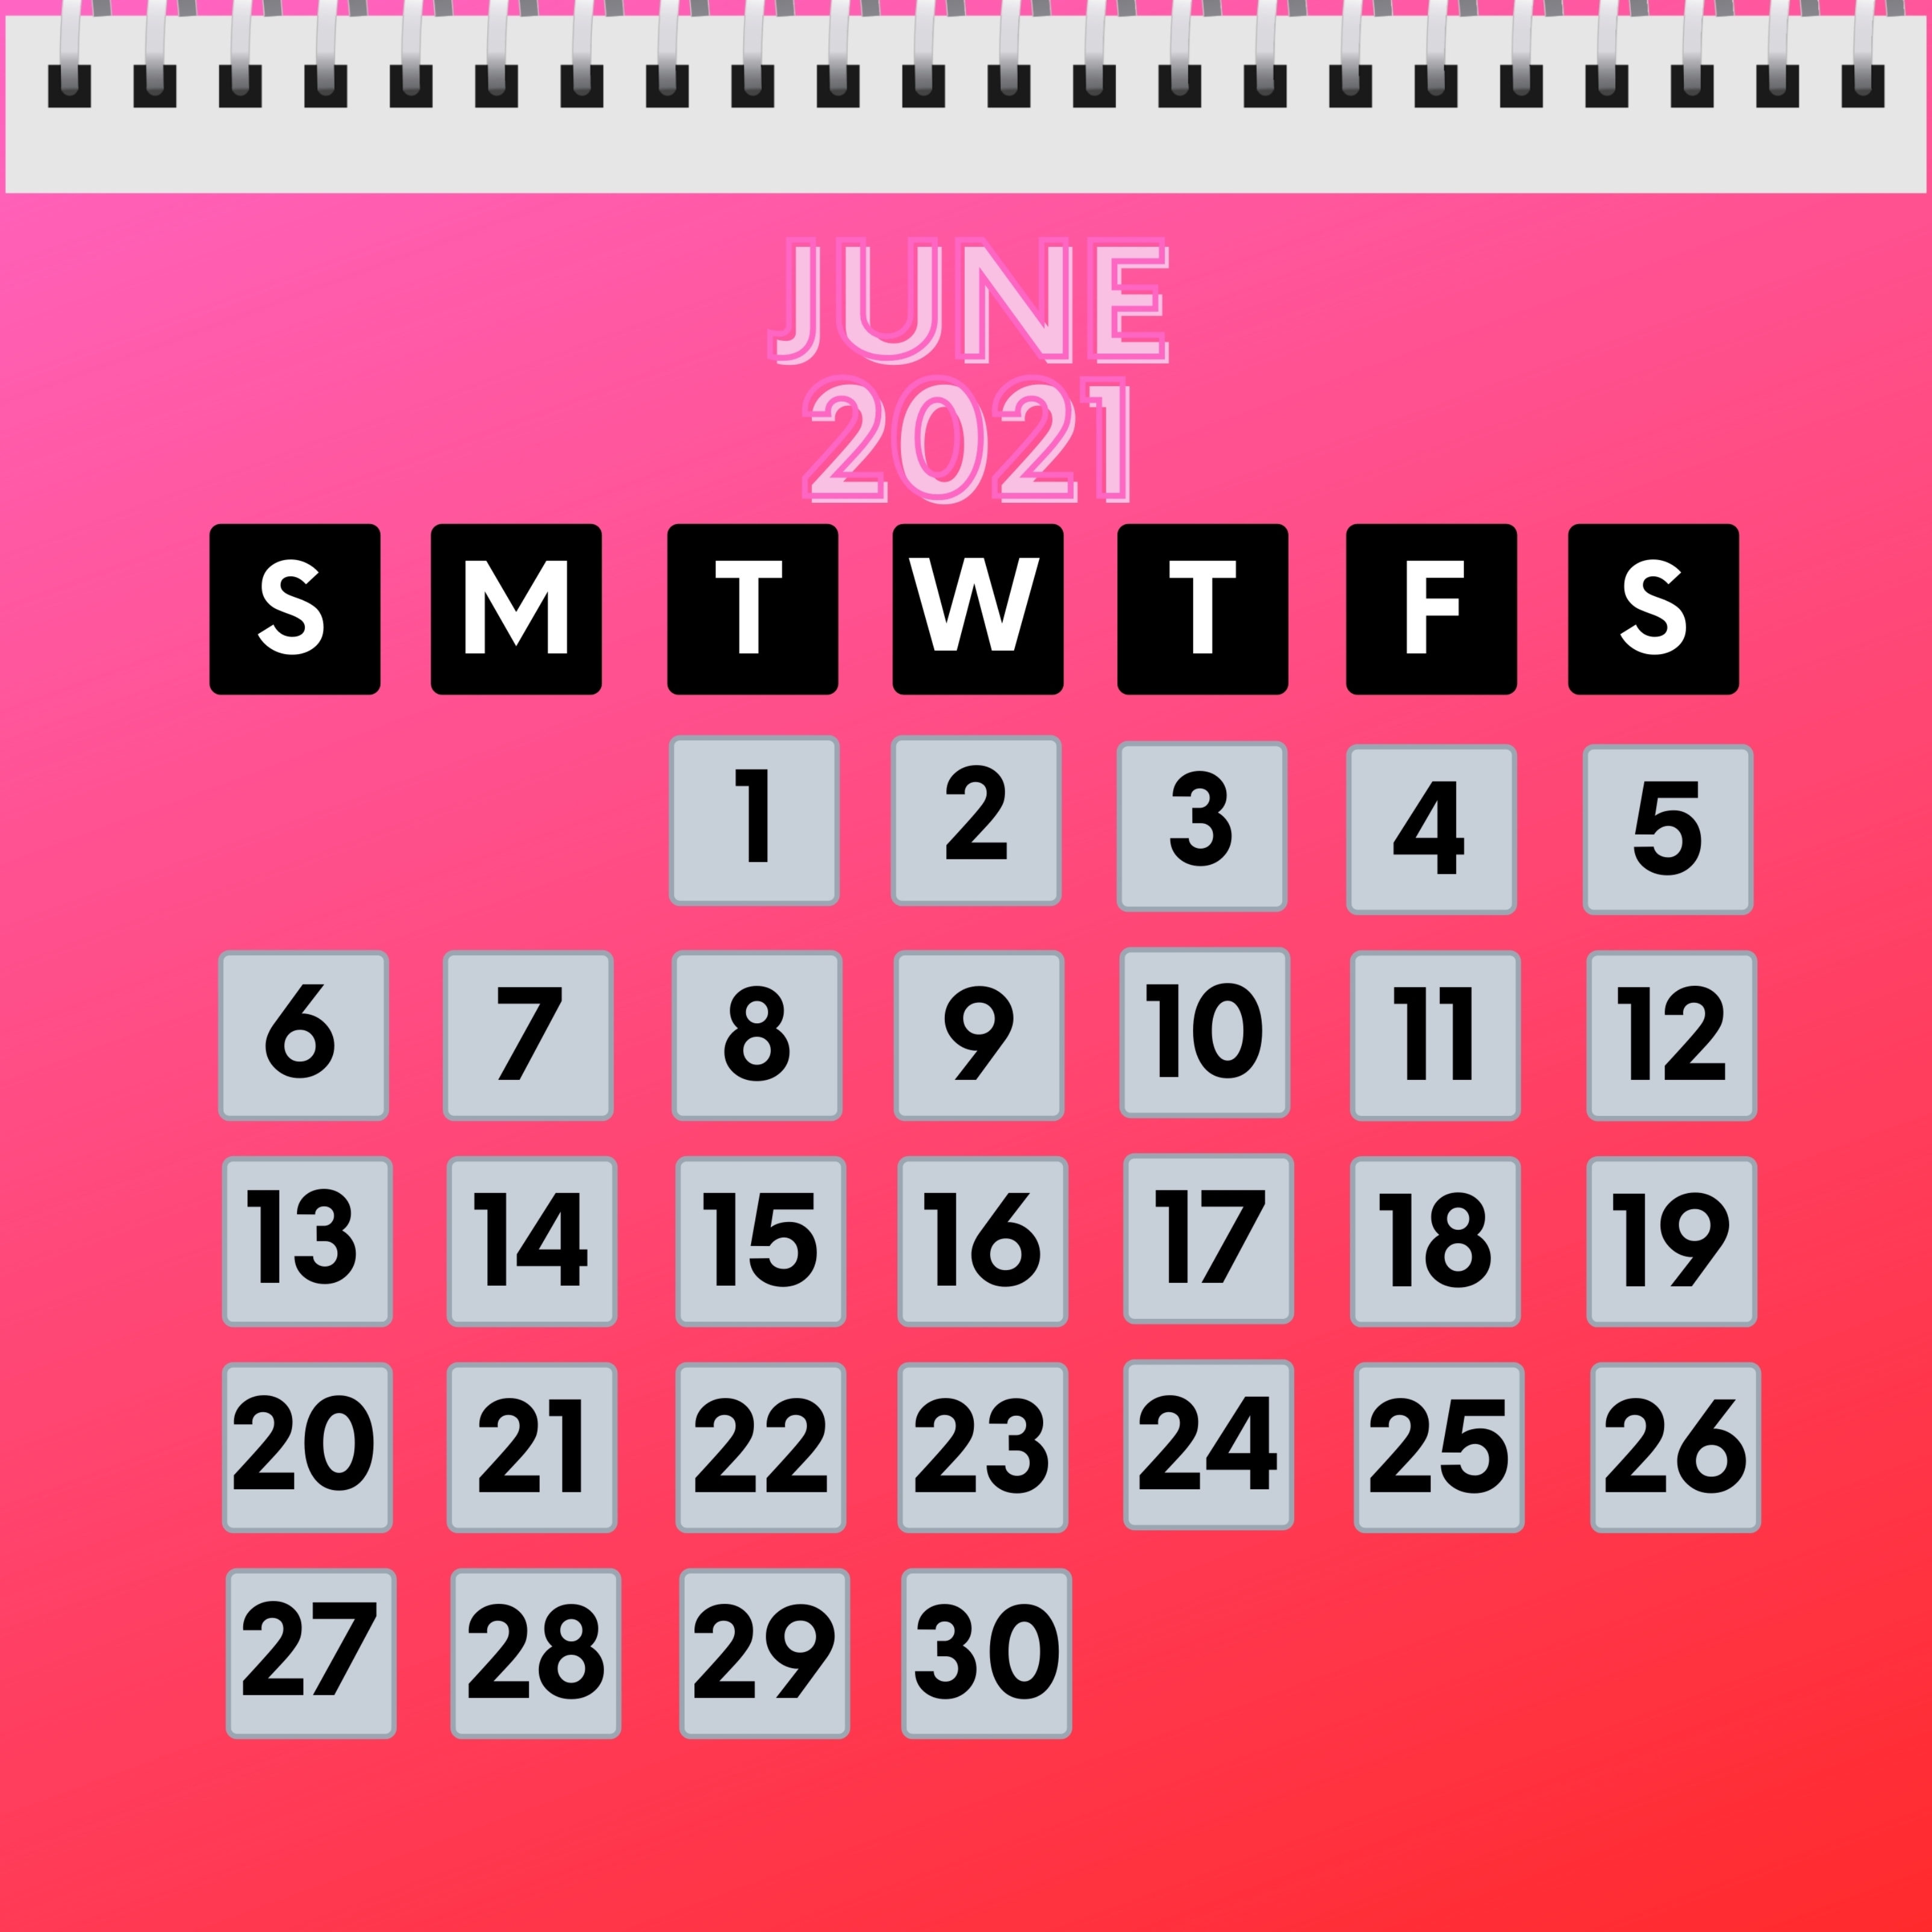 iPad Wallpapers June 2021 Calendar iPad Wallpaper 3208x3208 px